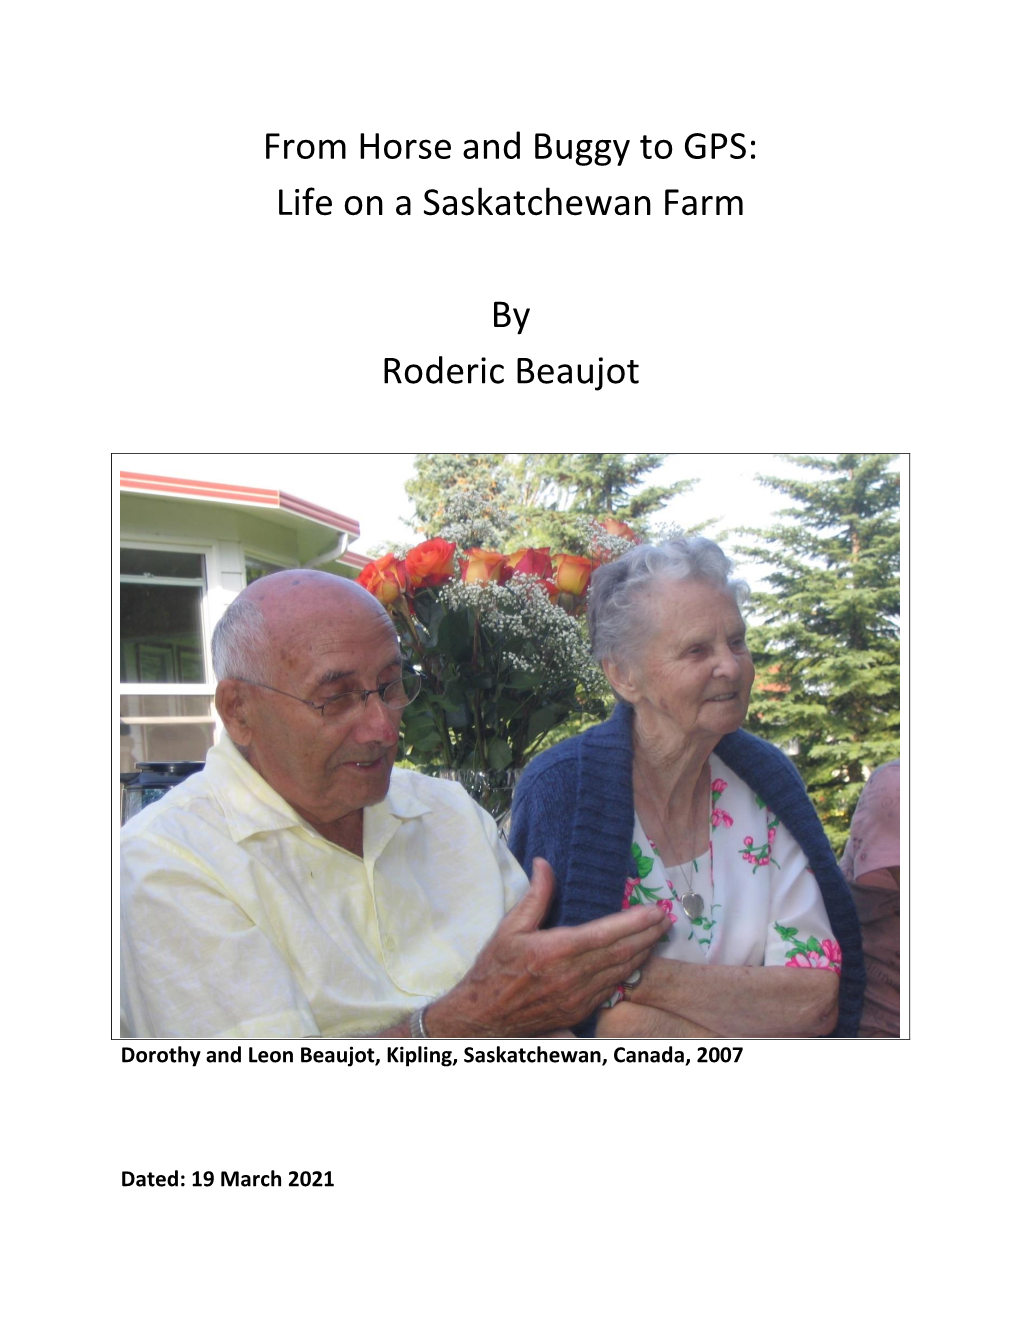 Life on a Saskatchewan Farm by Roderic Beaujot